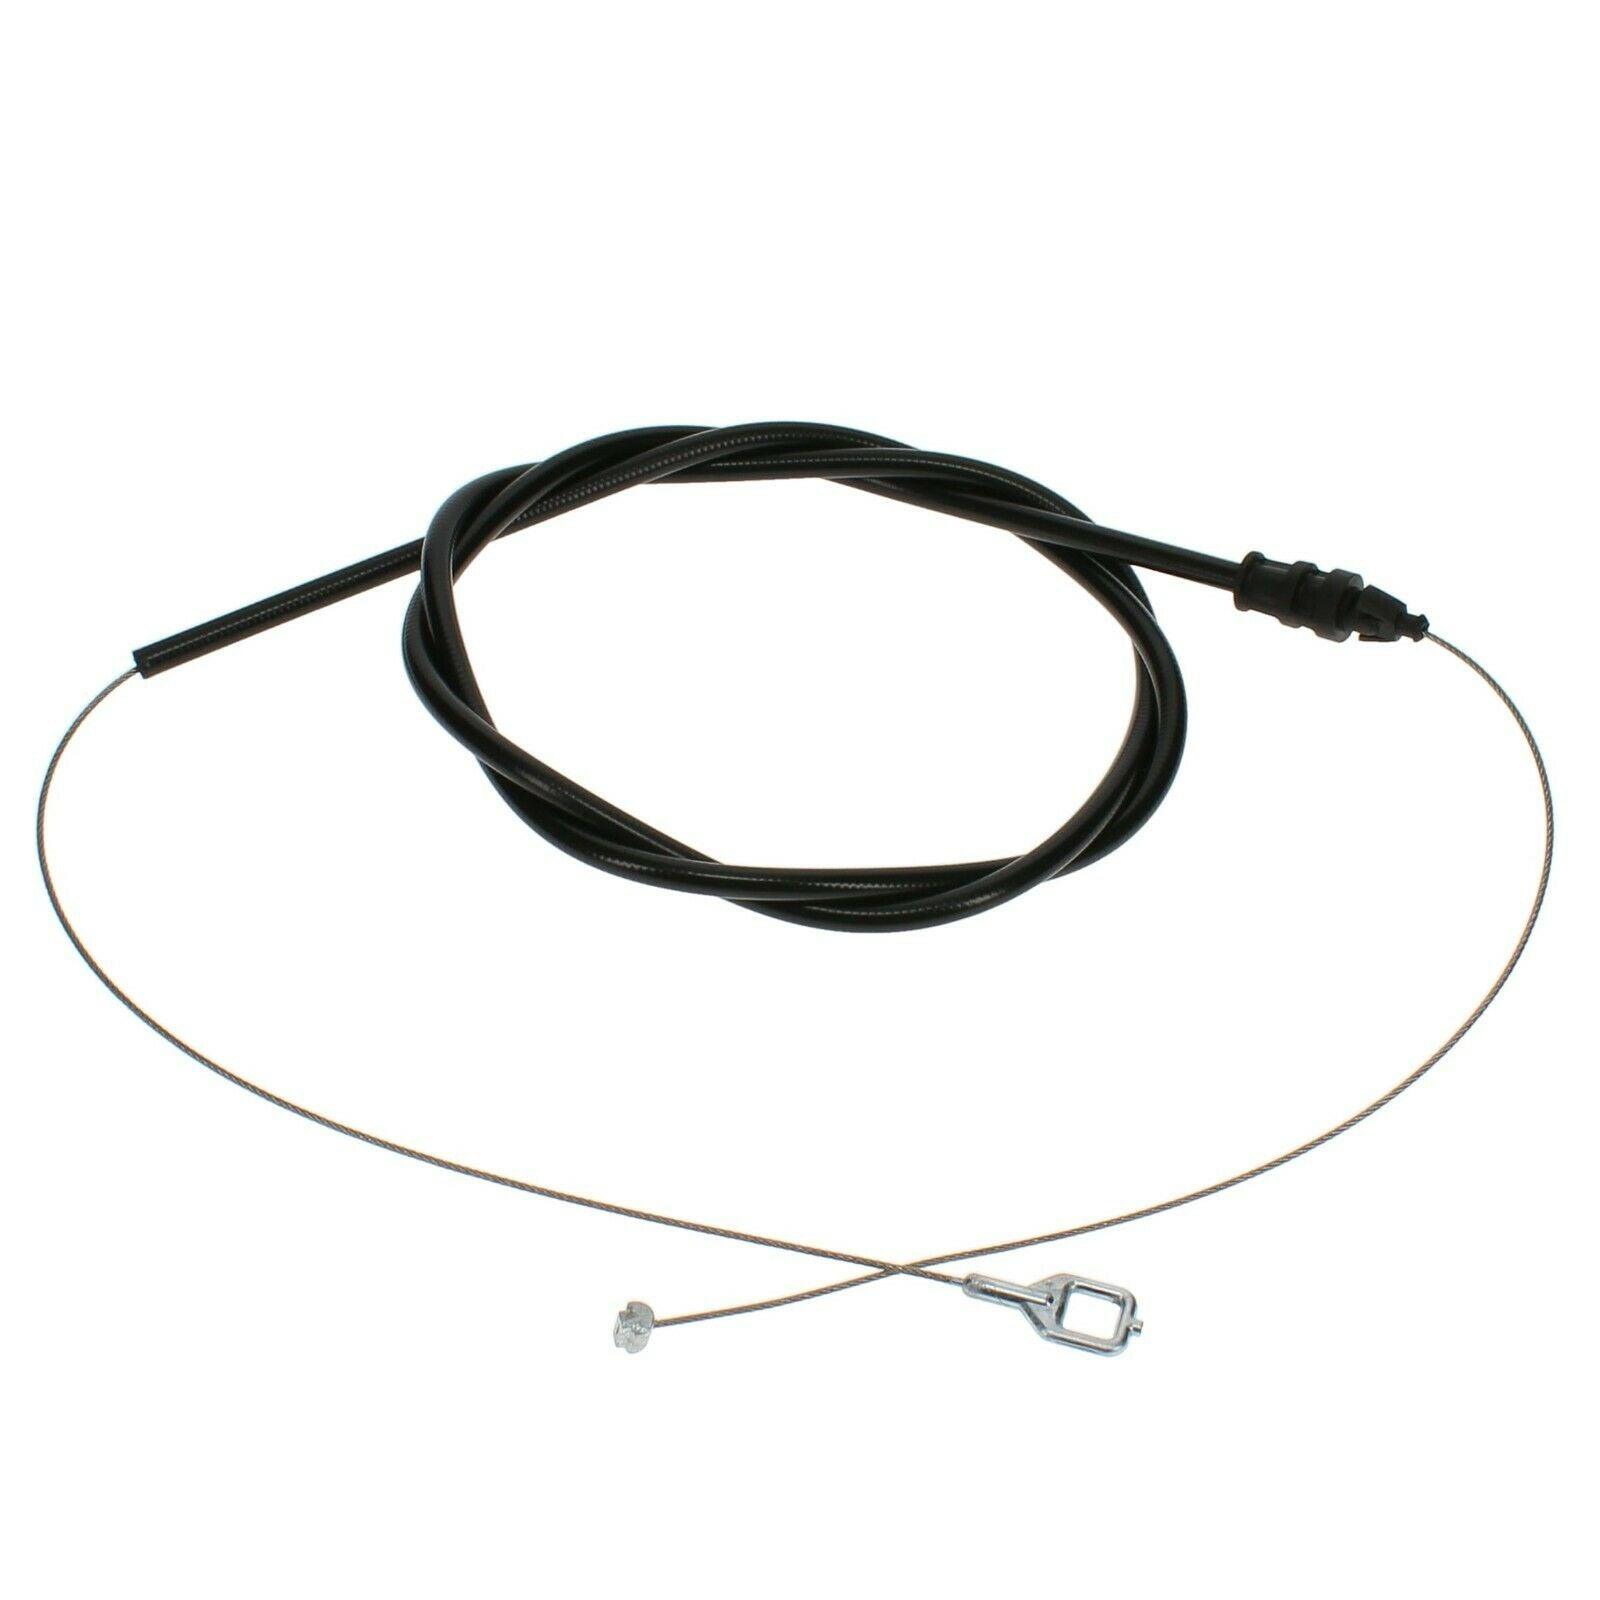 Chute Deflector Cable